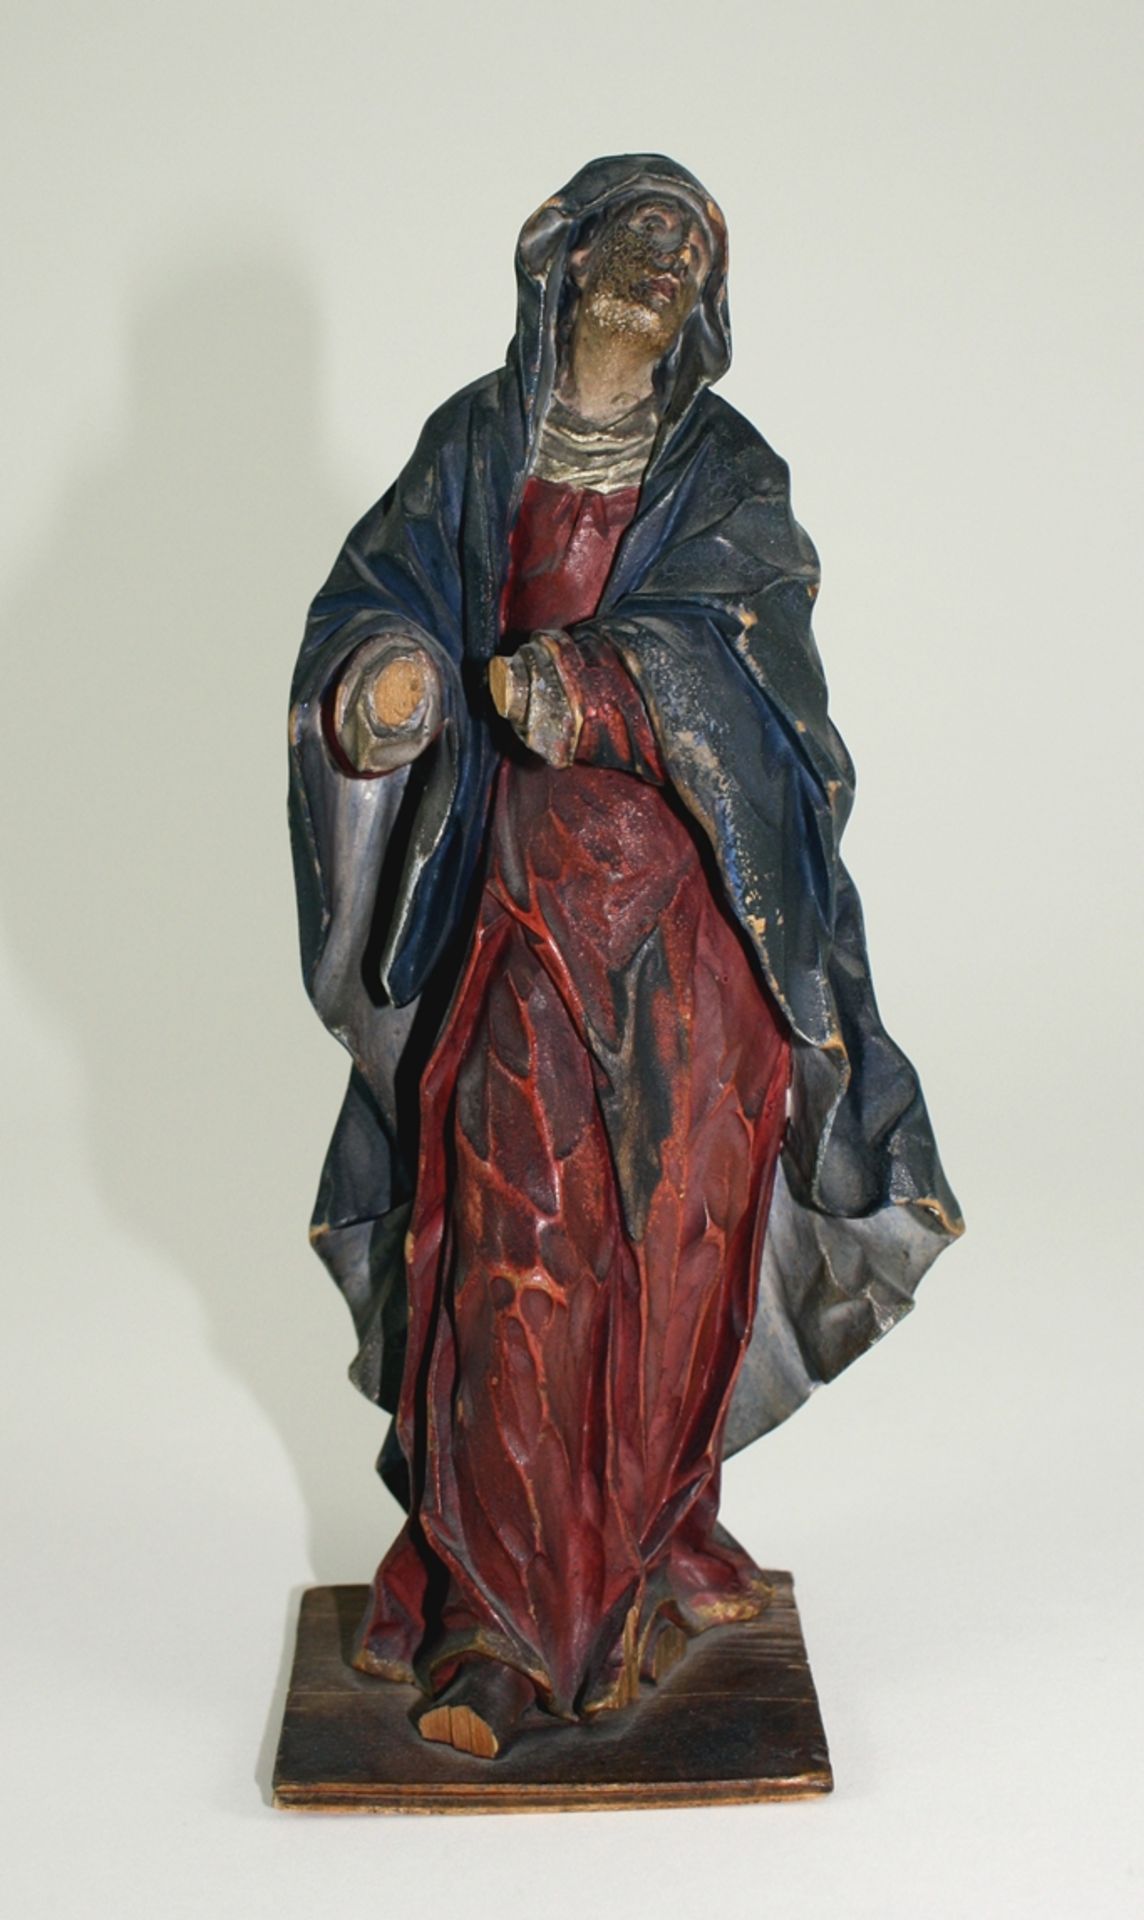 Maria als Kreuzfigur. Hände fehlen. Holz. Farbig gefasst. Anfang 18. Jh. H 20 cm. Sammlung Metz Zir